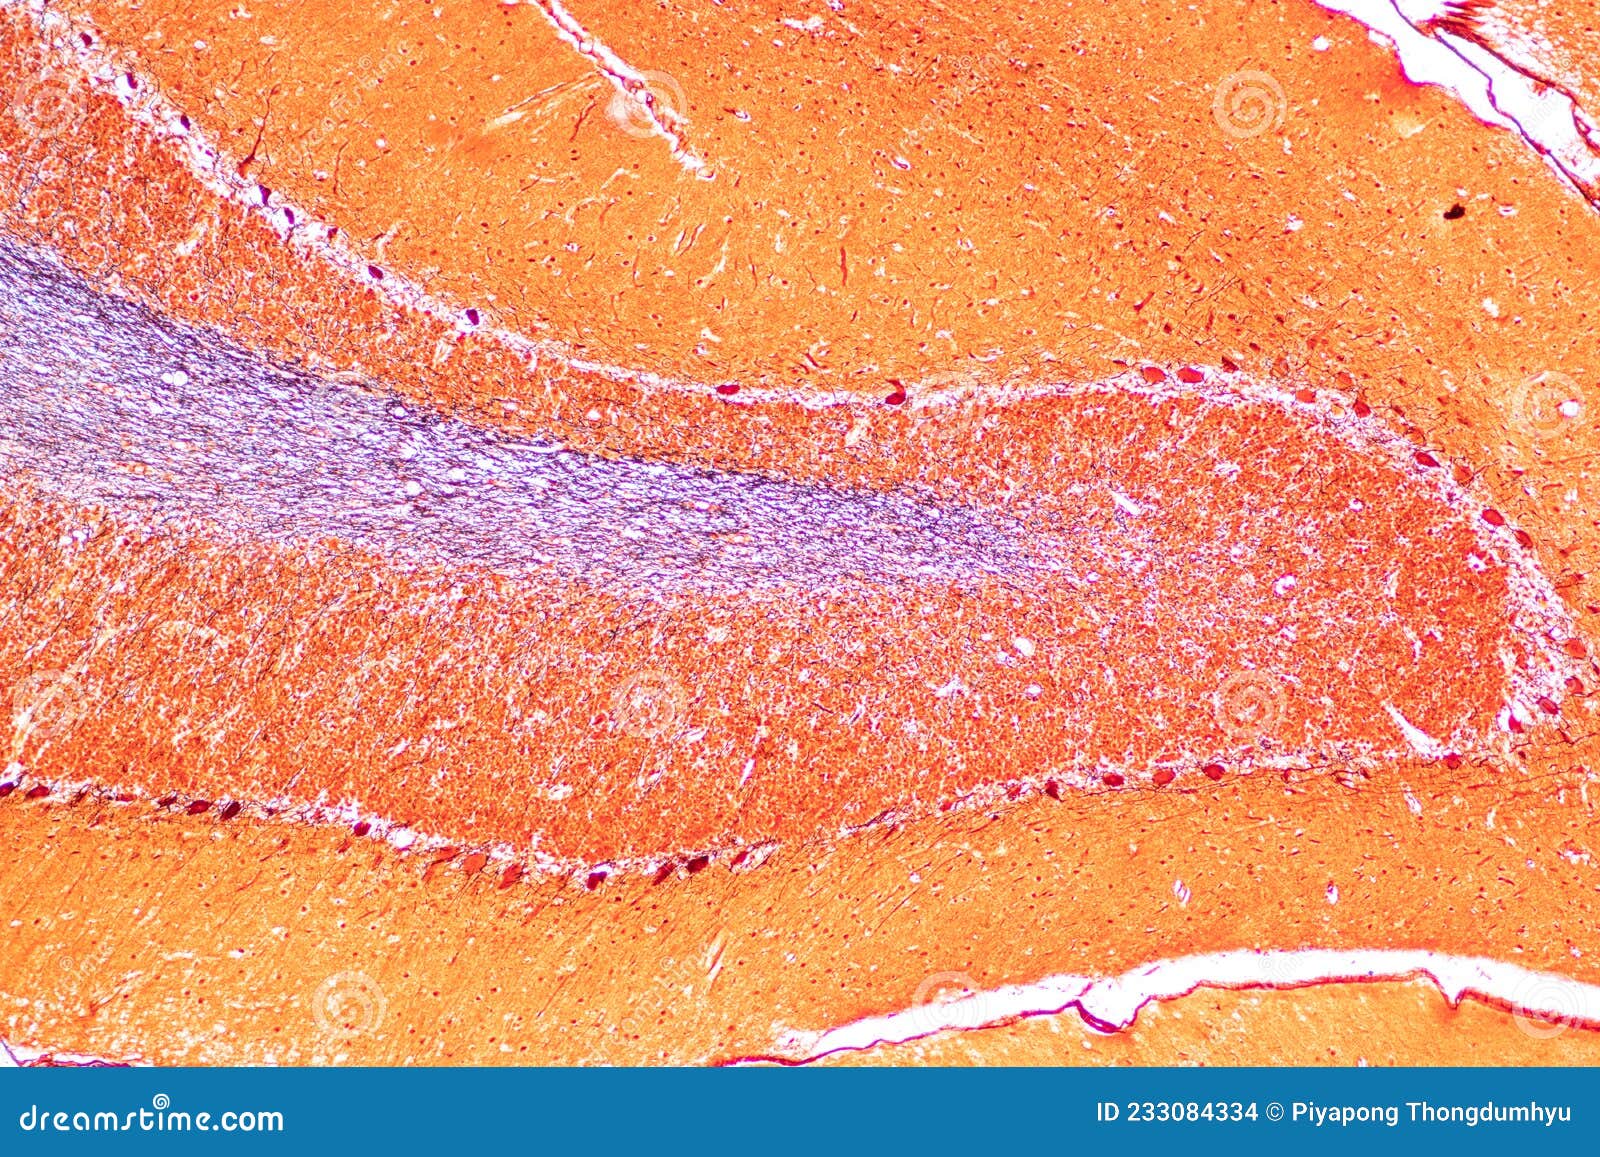 cerebellum, thalamus, medulla oblongata, spinal cord and motor neuron human under the microscope.